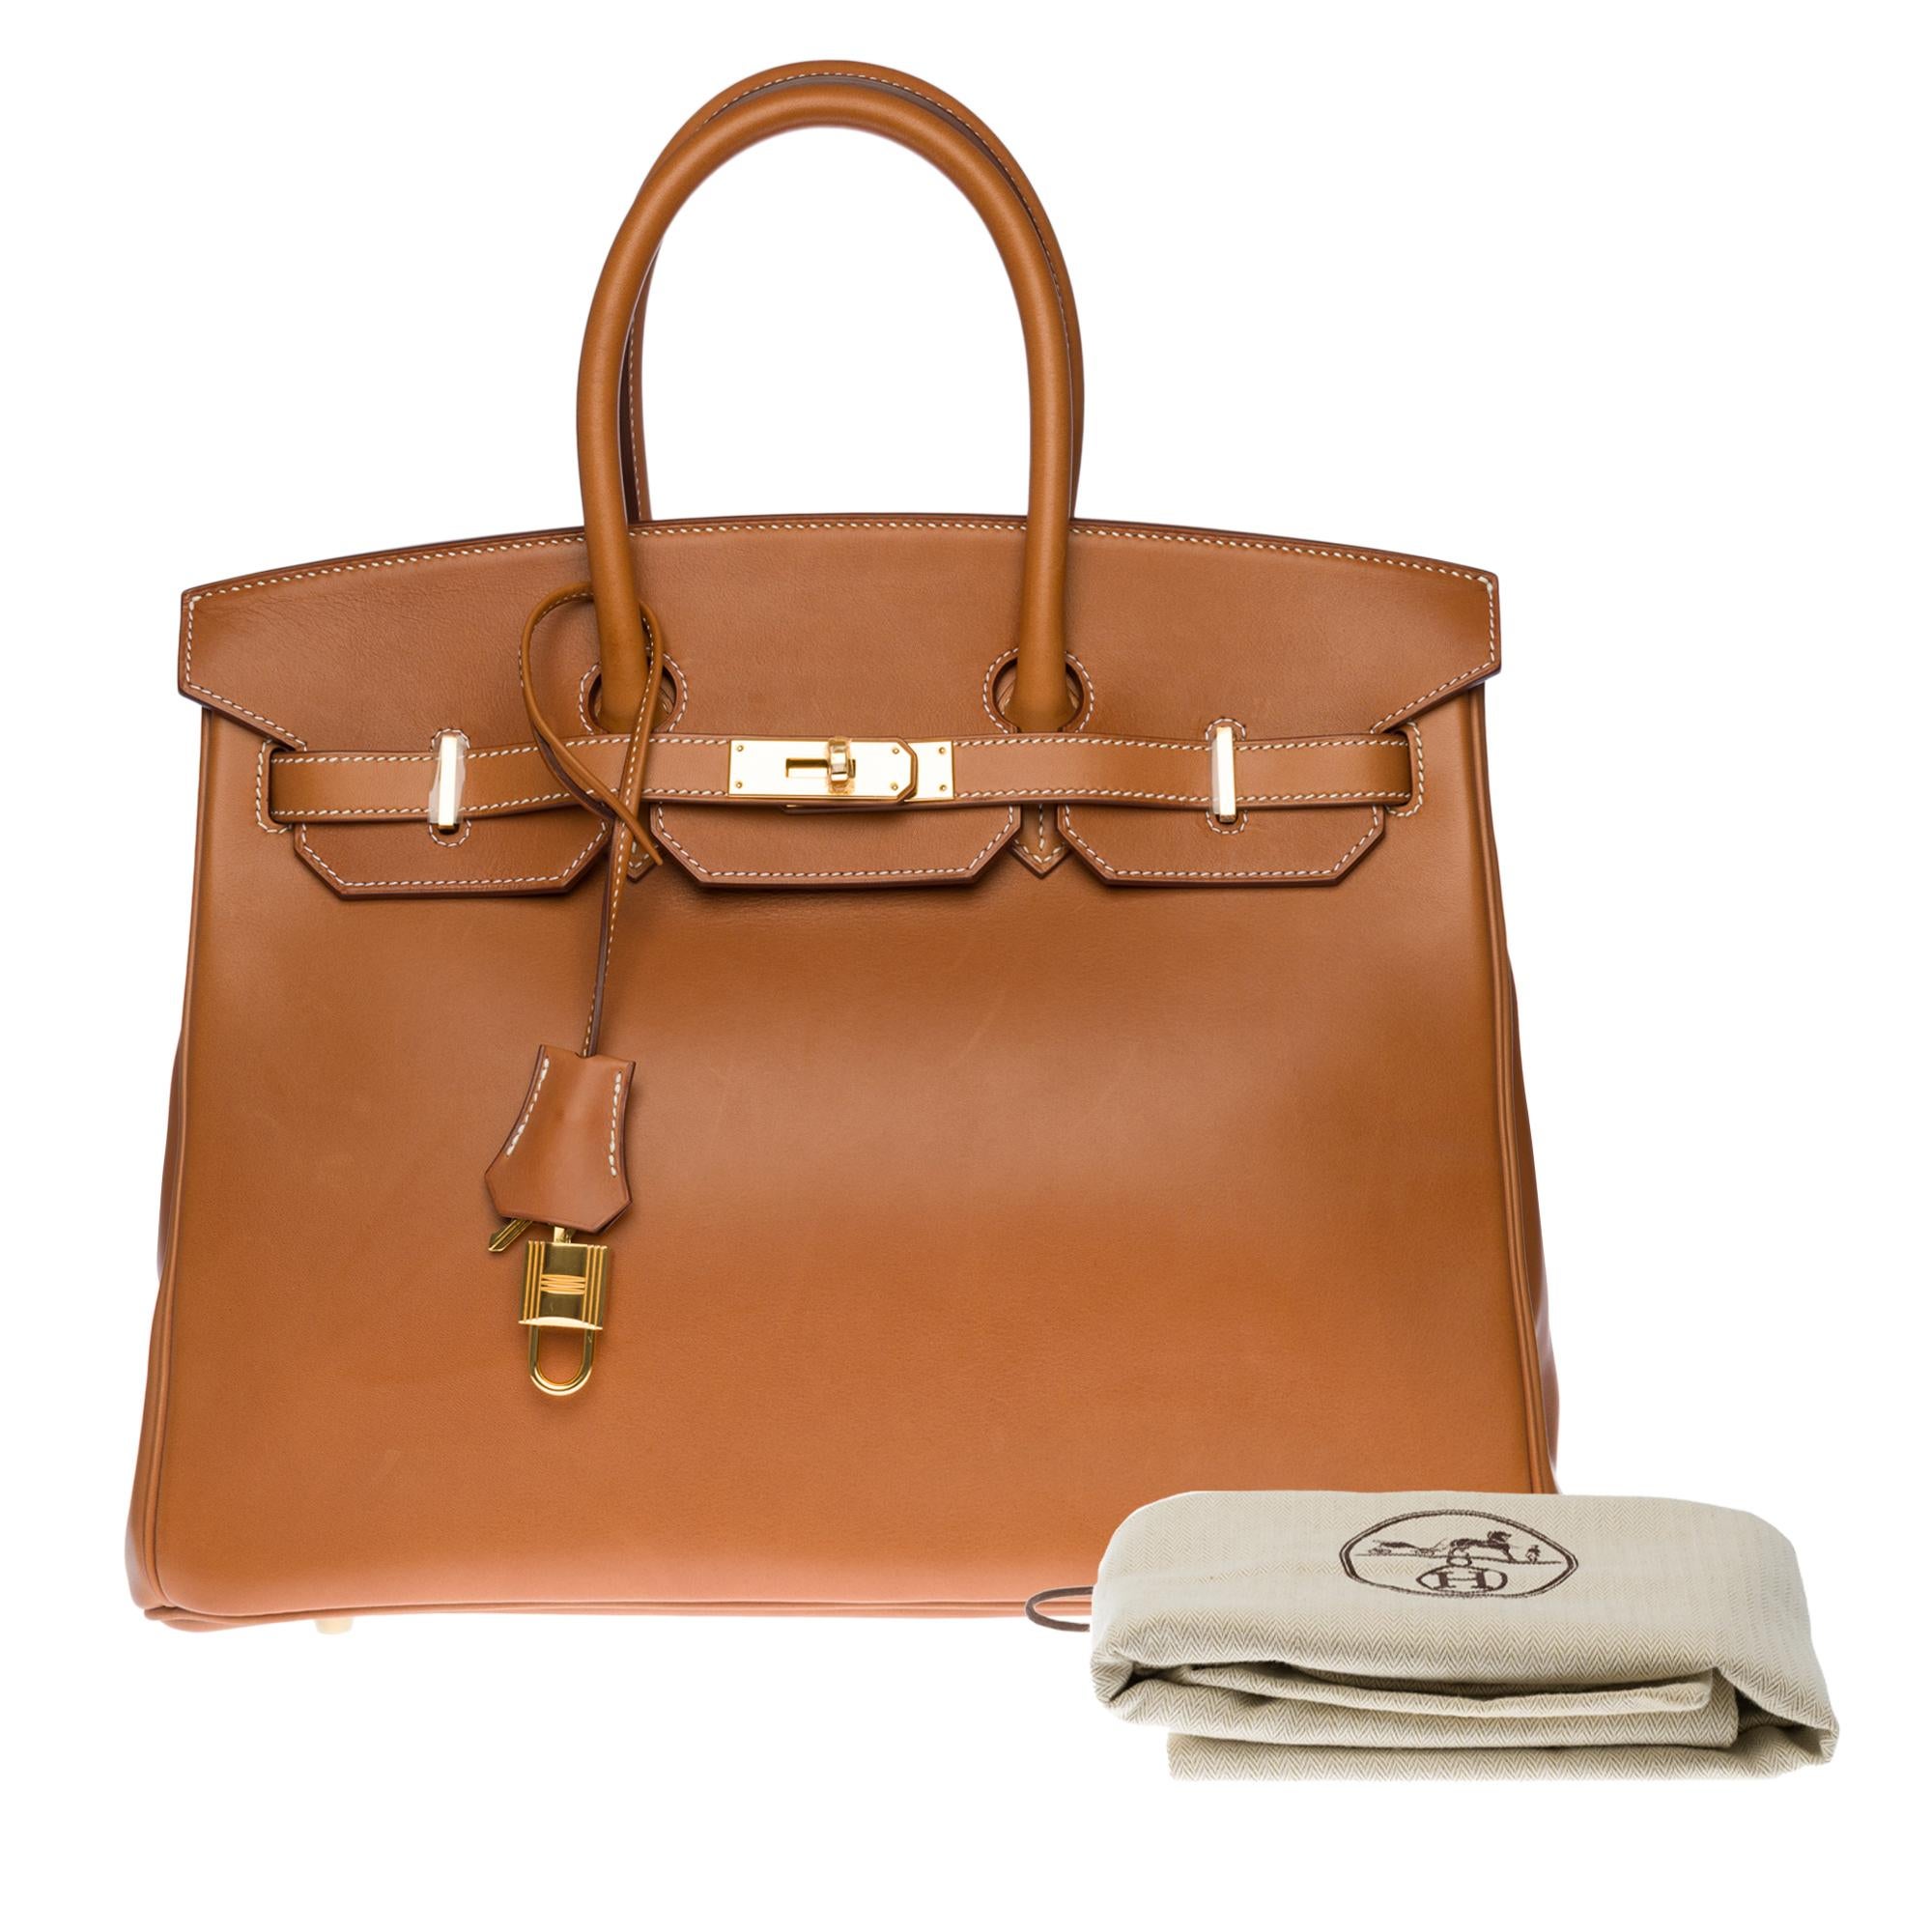 NEW - ULTRA RARE- Hermès Birkin 35 handbag in Gold Barenia leather, GHW 6